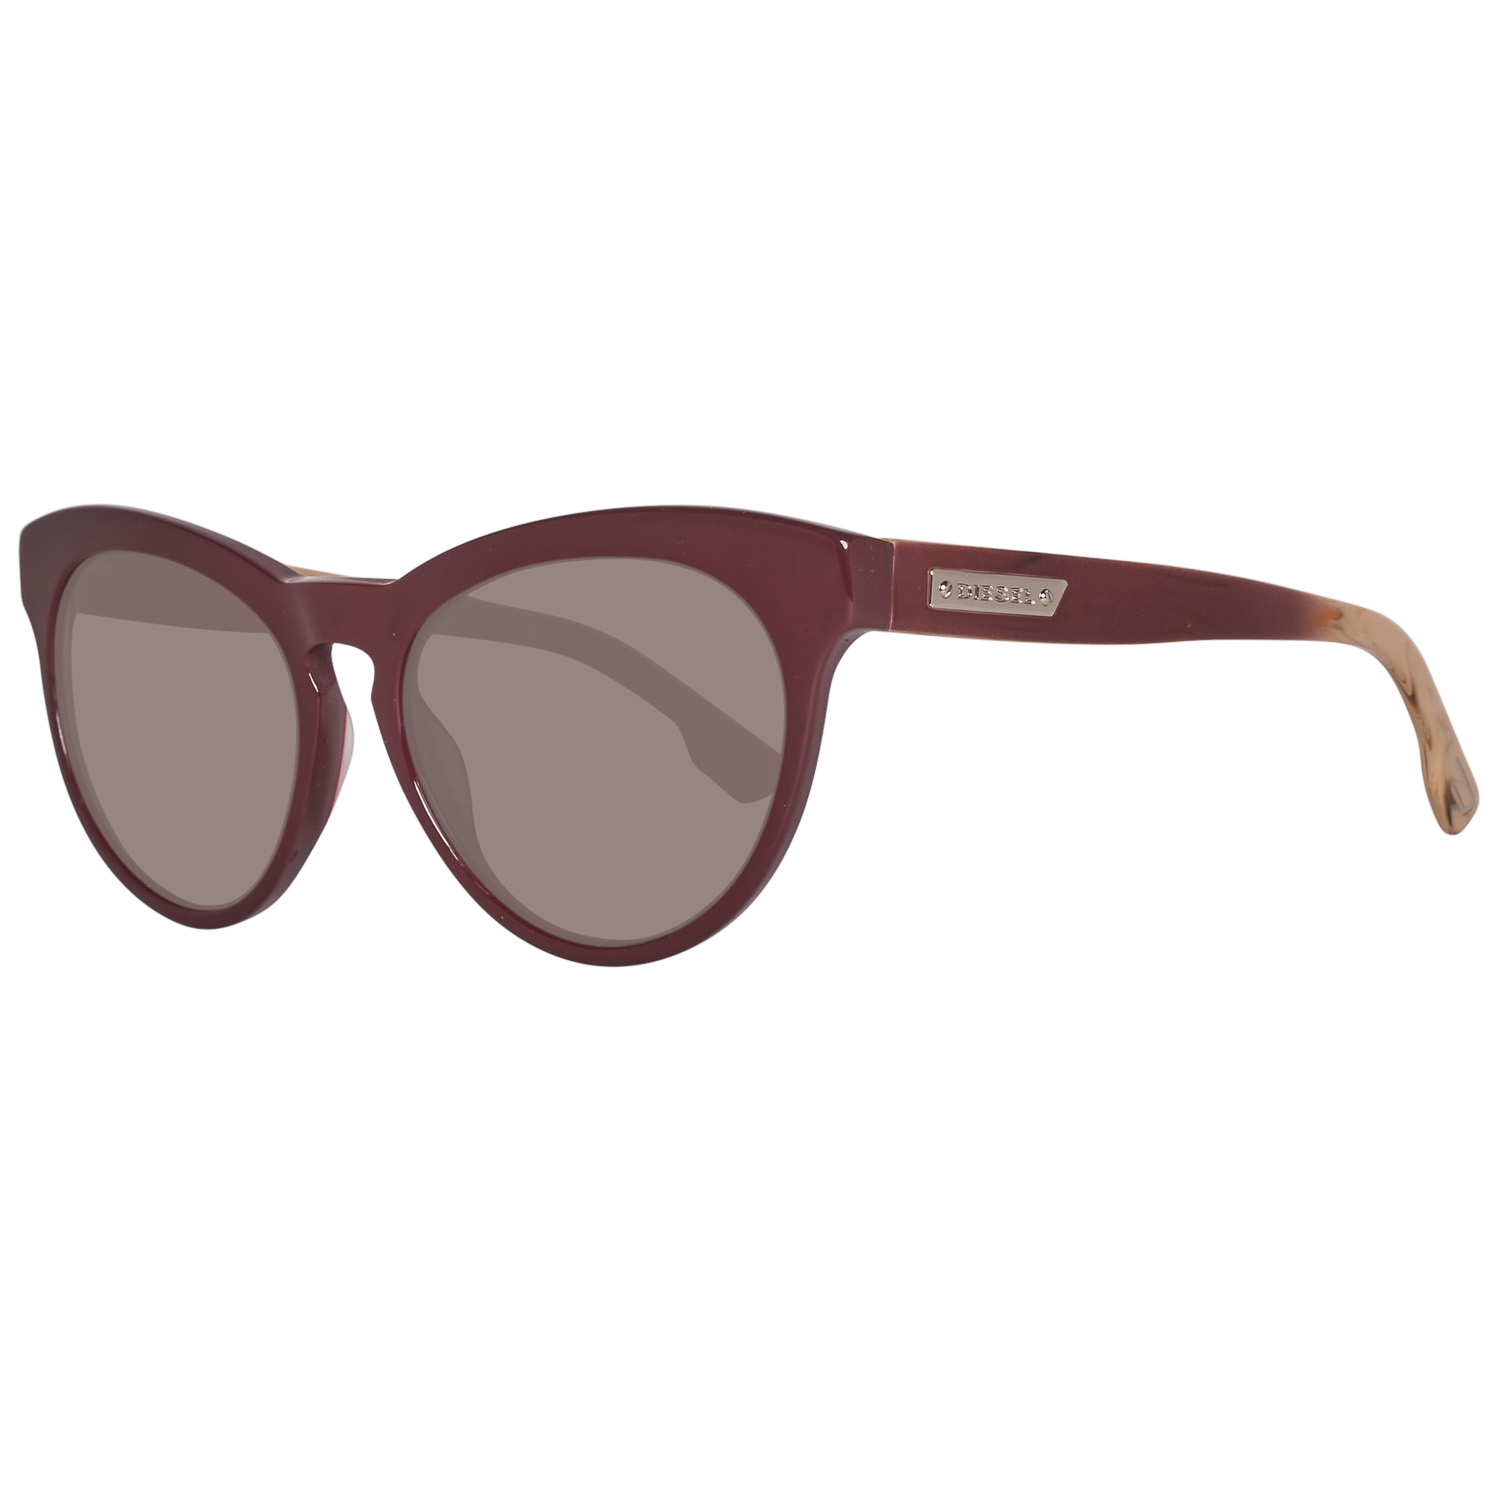 Diesel Sunglasses DL0150 69A 56